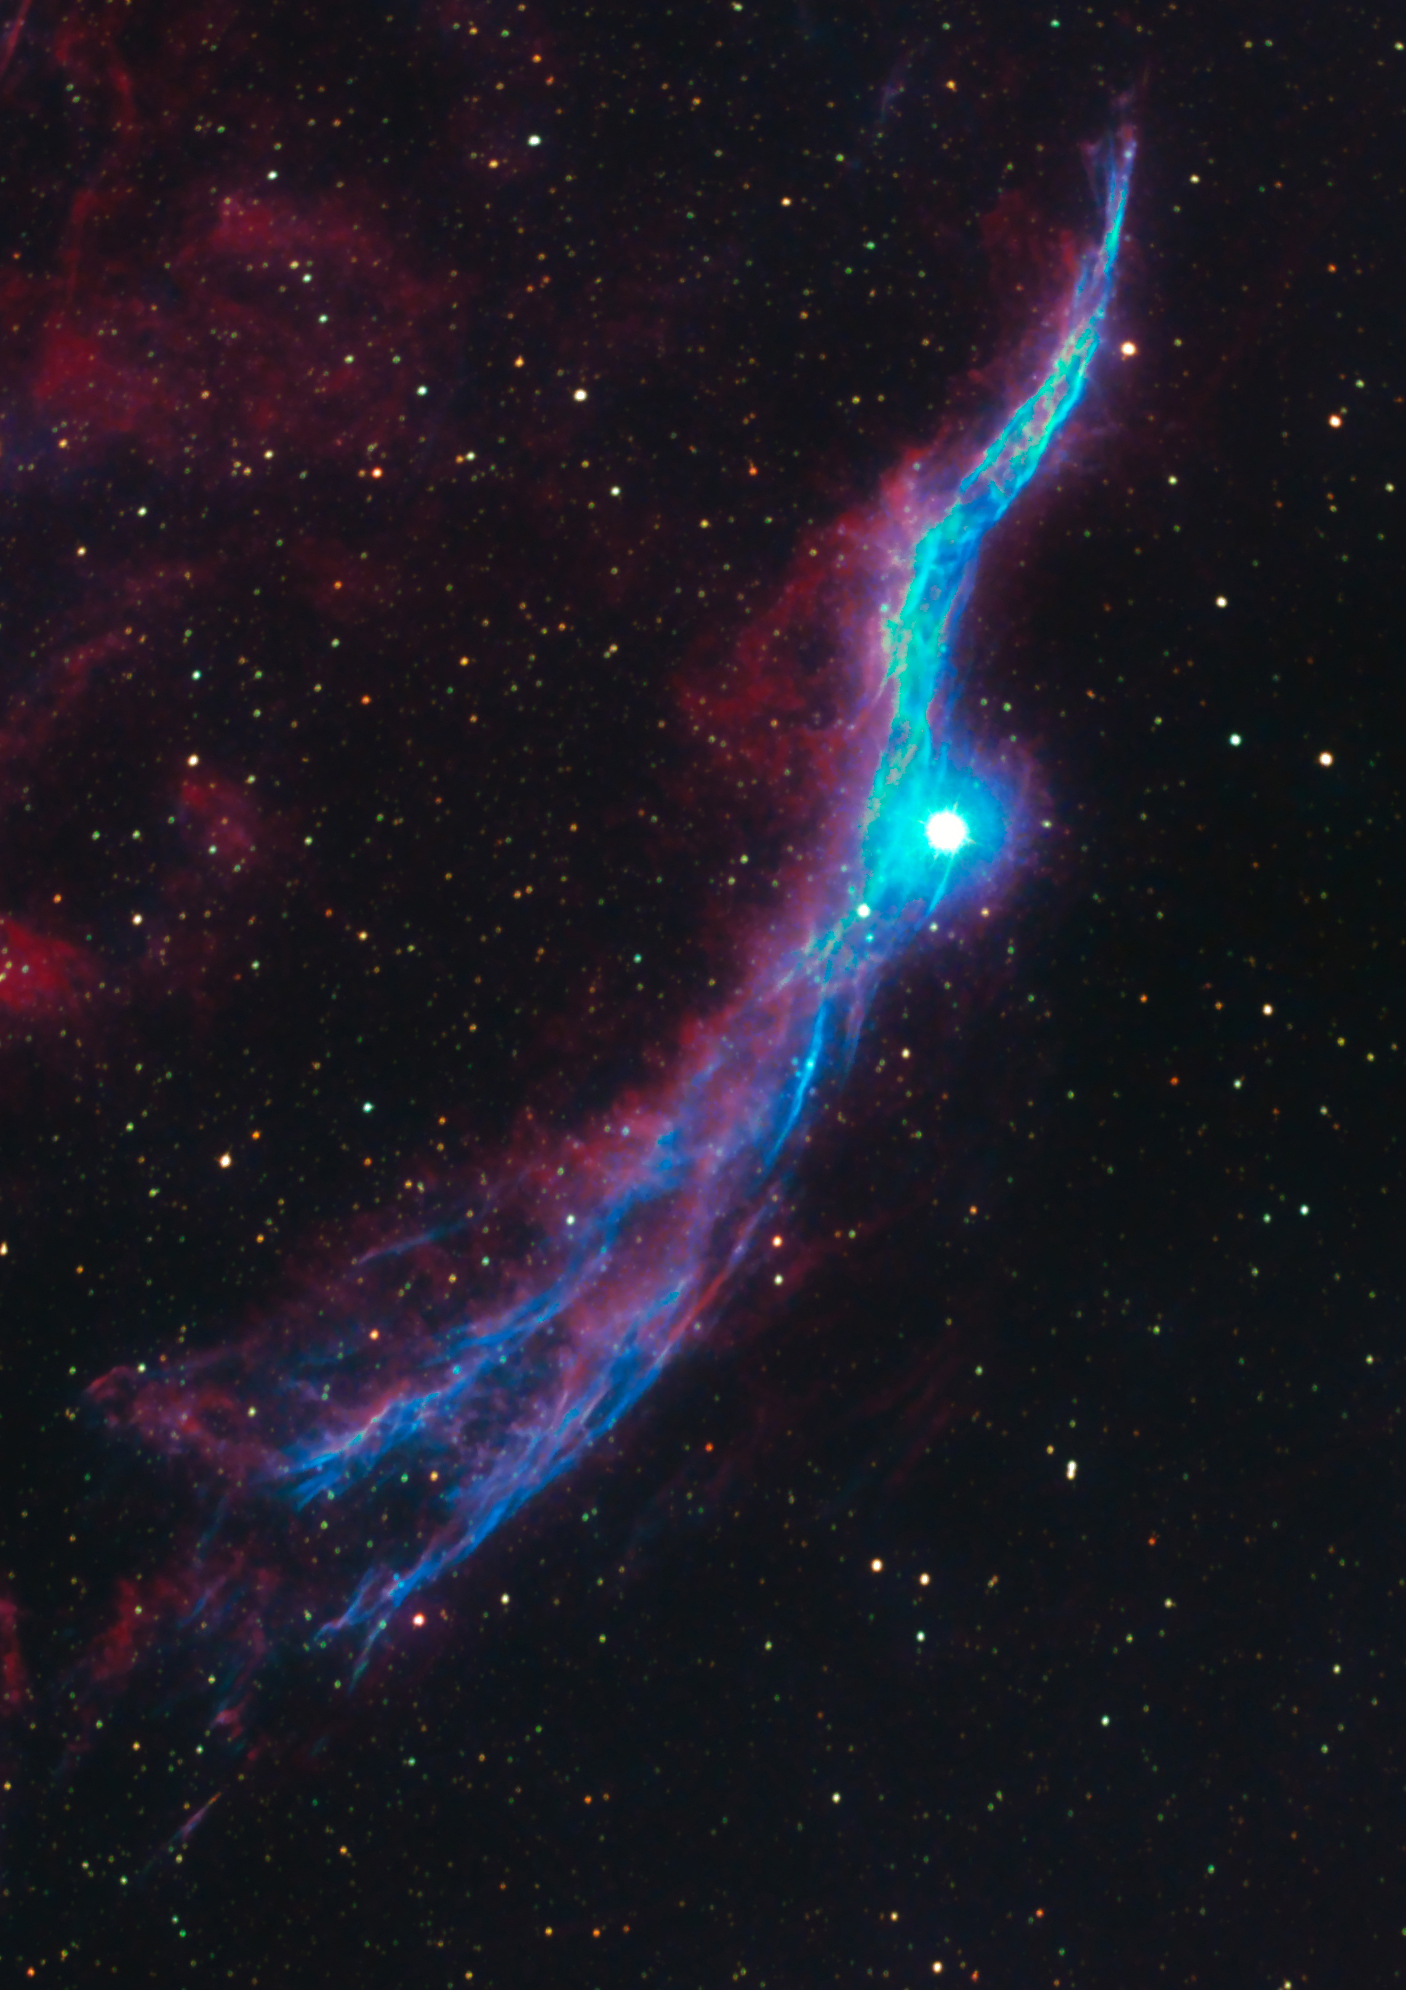 NGC6960_JPG-Crop.jpg